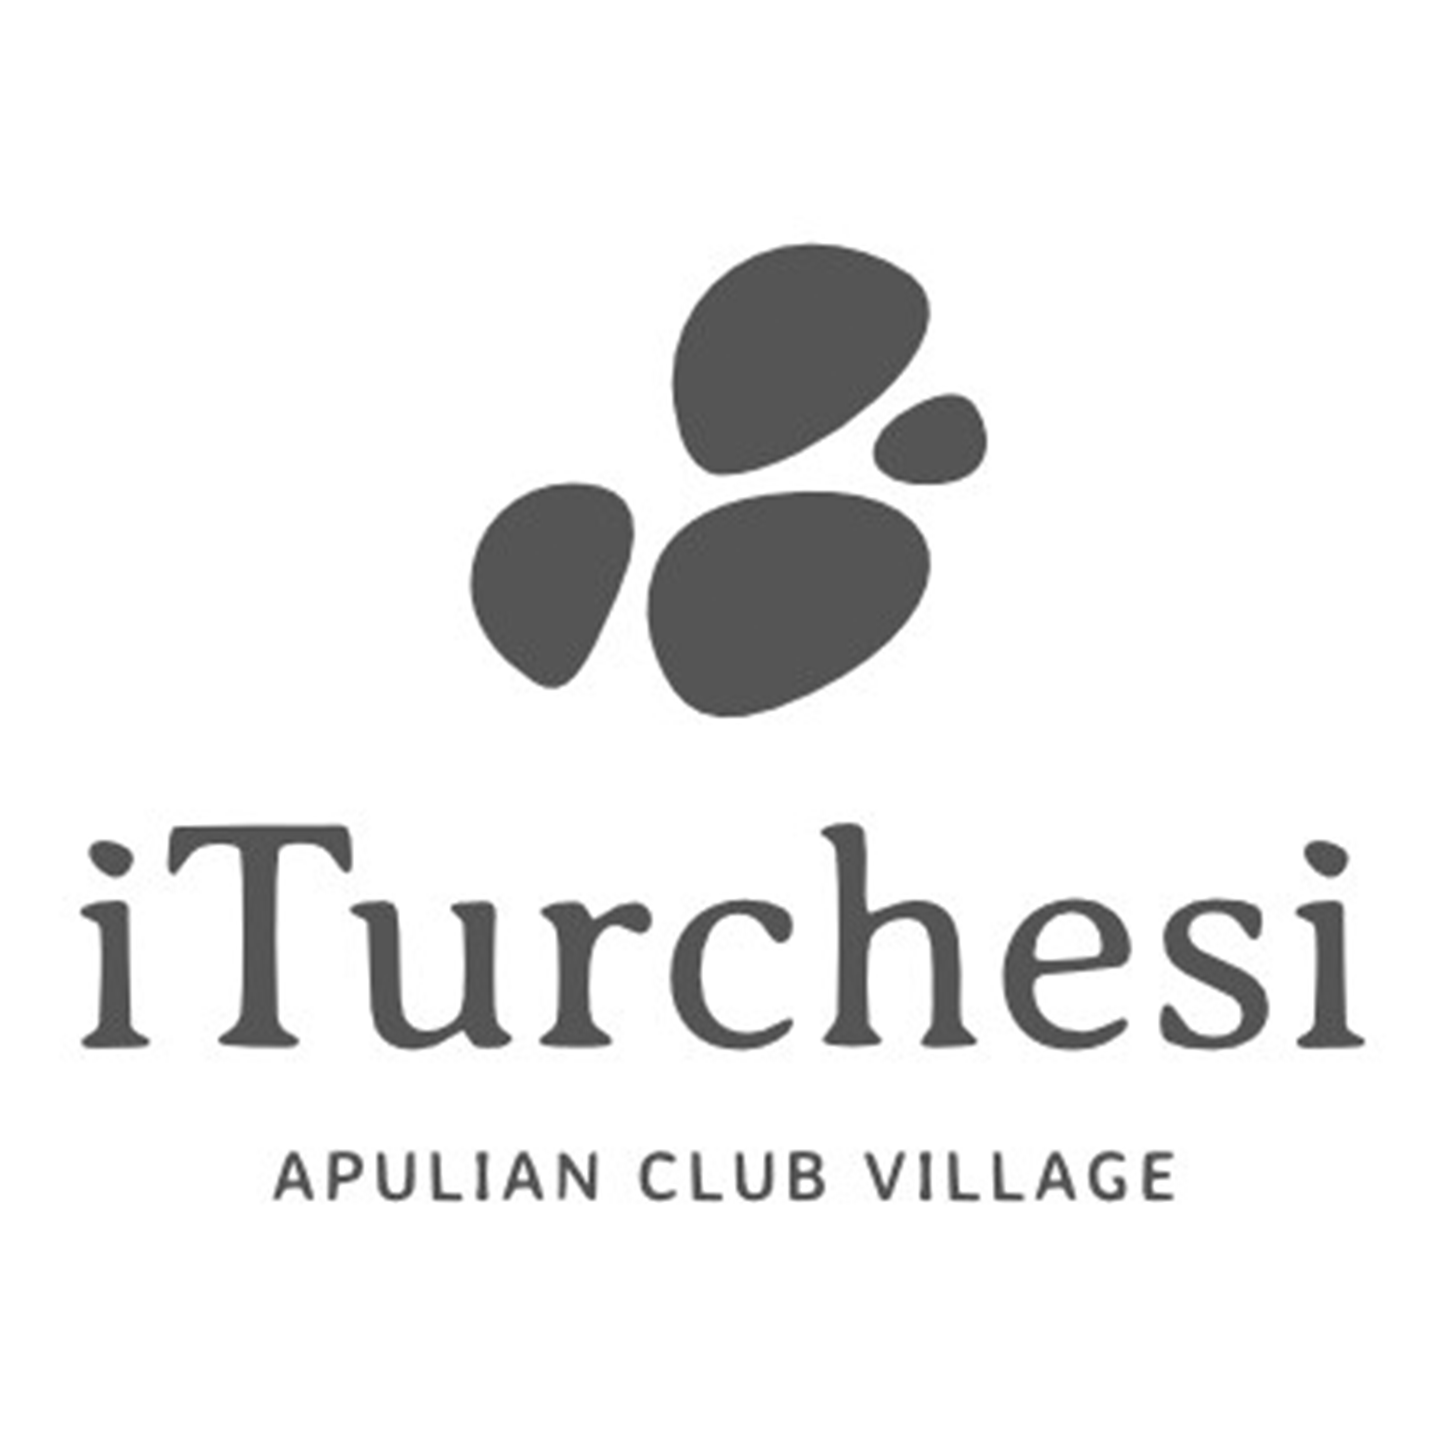 i Turchesi – Apulian Club Village